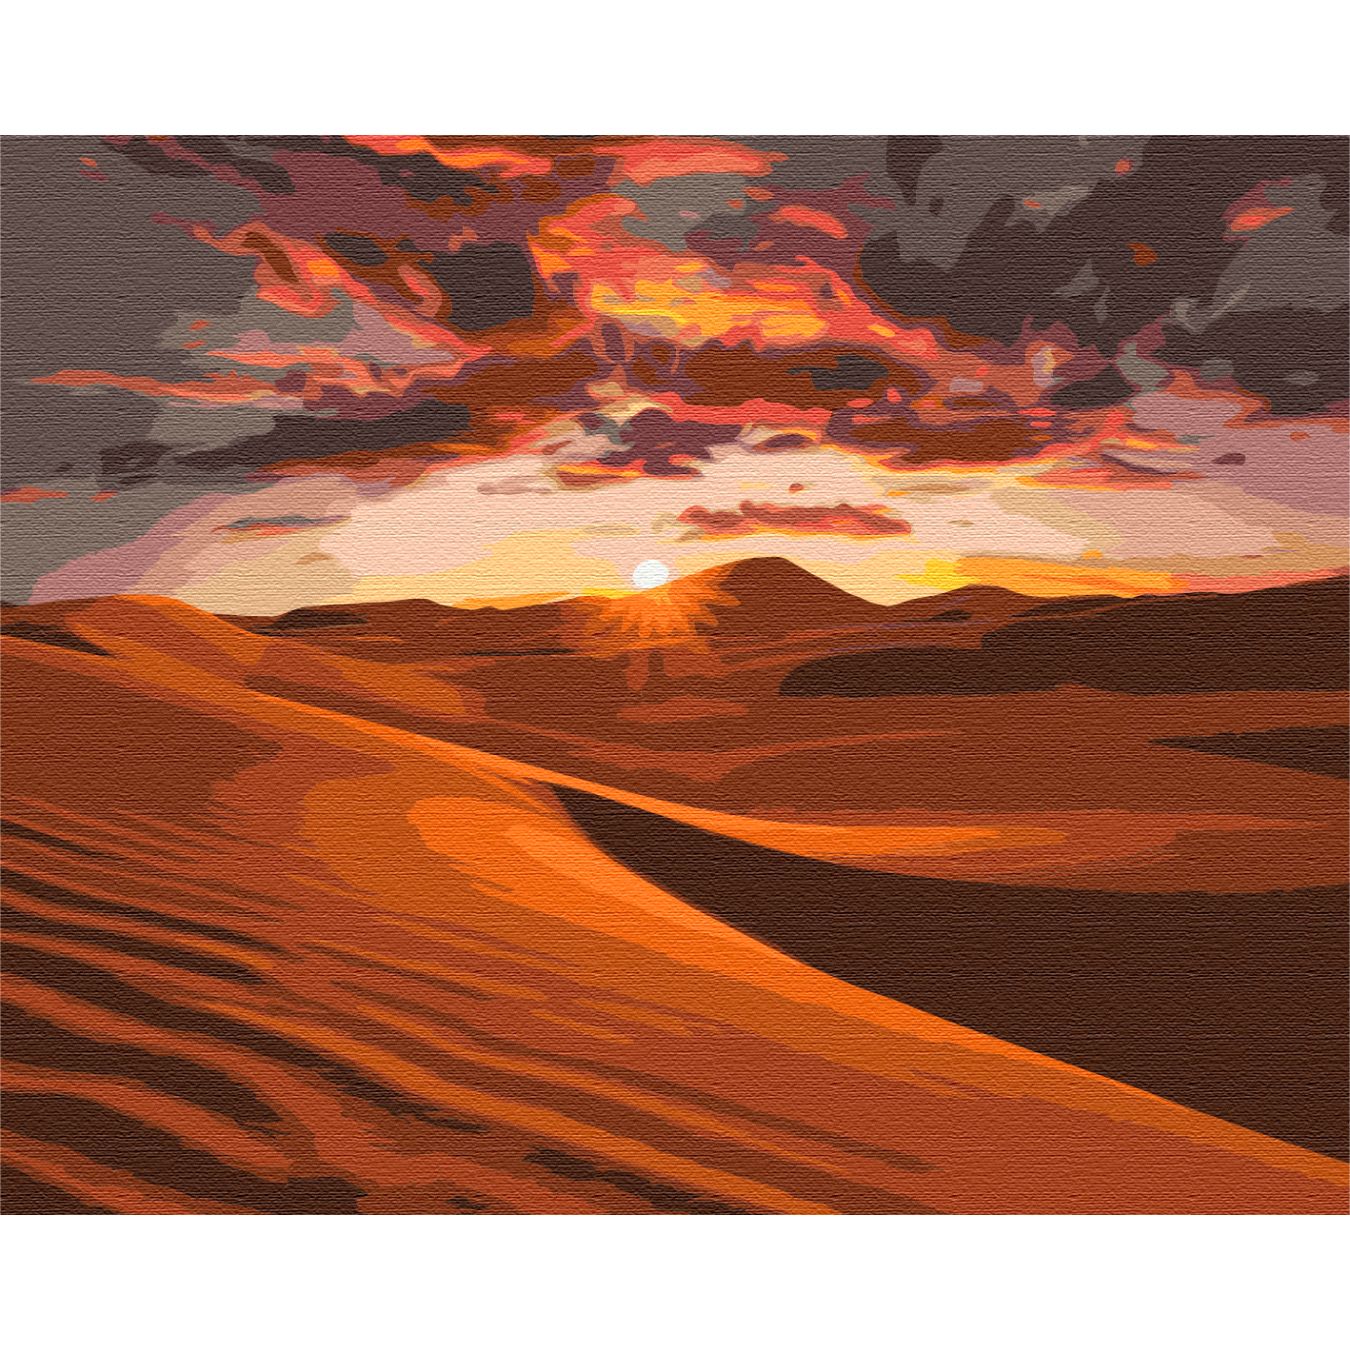 Картина по номерам Закат в пустыне Brushme 40x50 см разноцветная 000221082 - фото 1